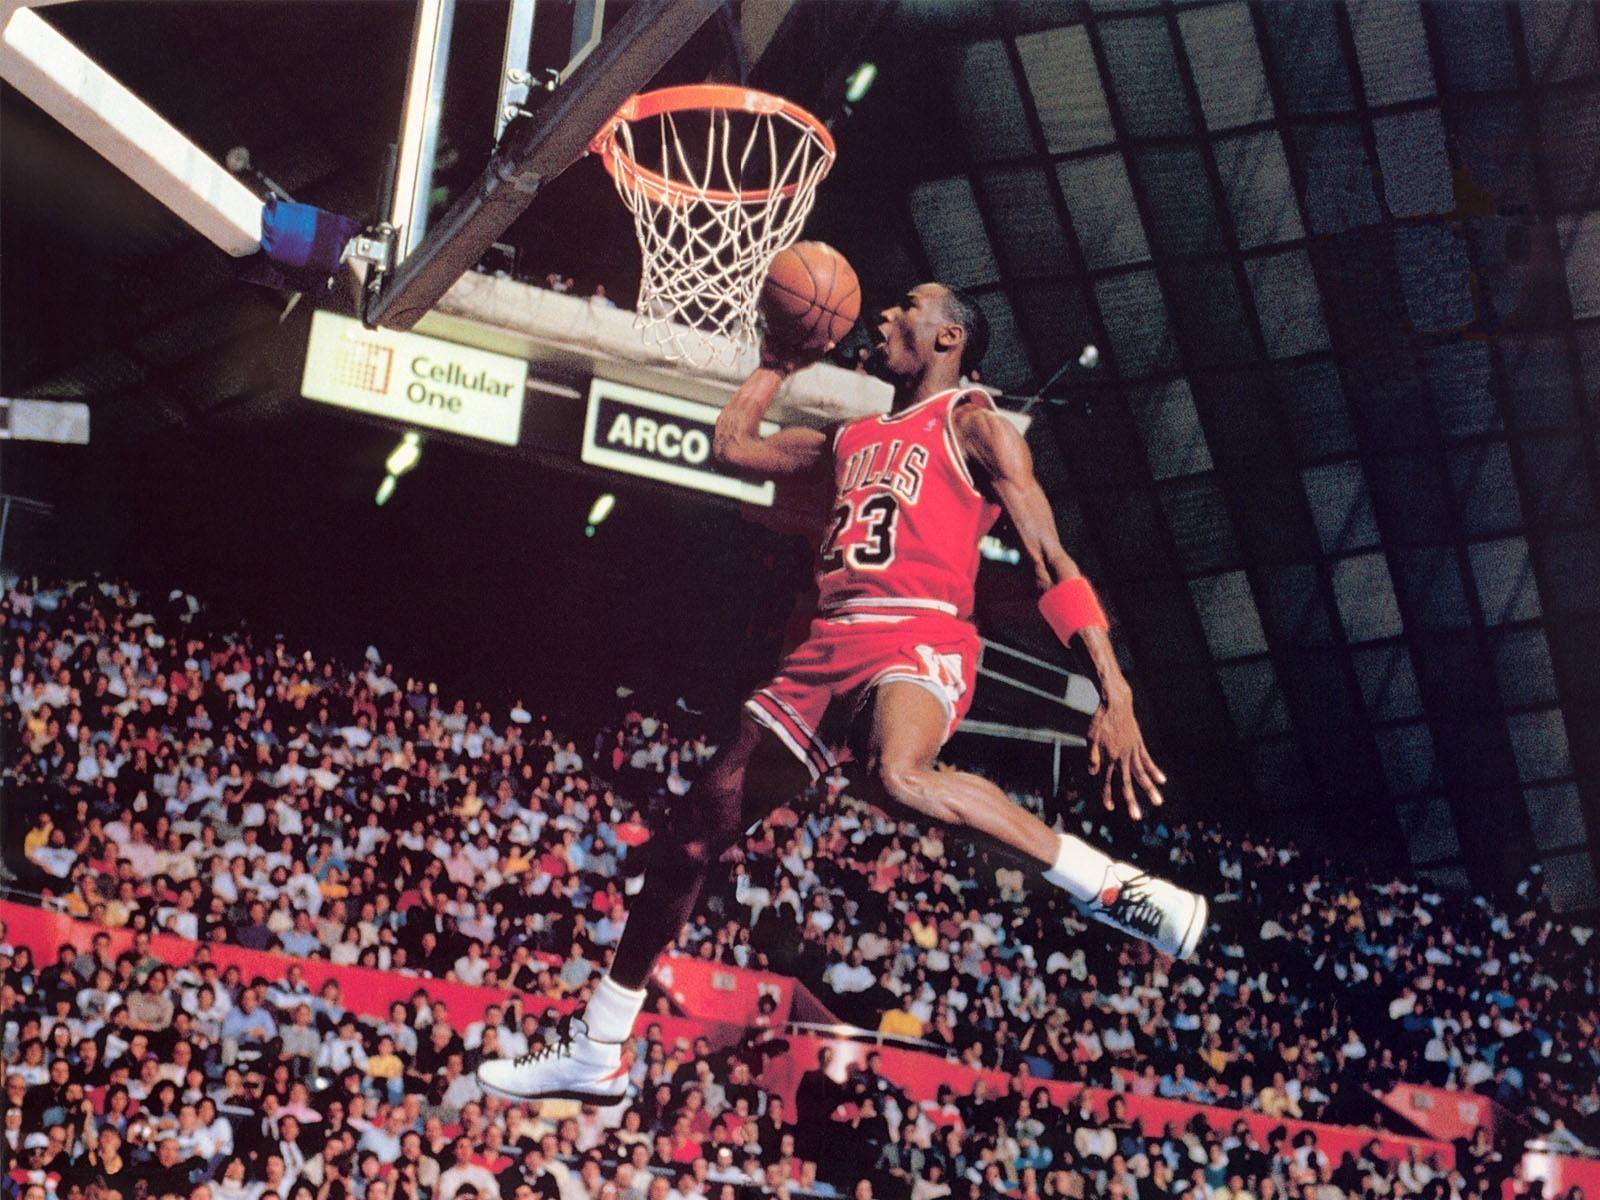 Michael Jordan HD Wallpaper and Background